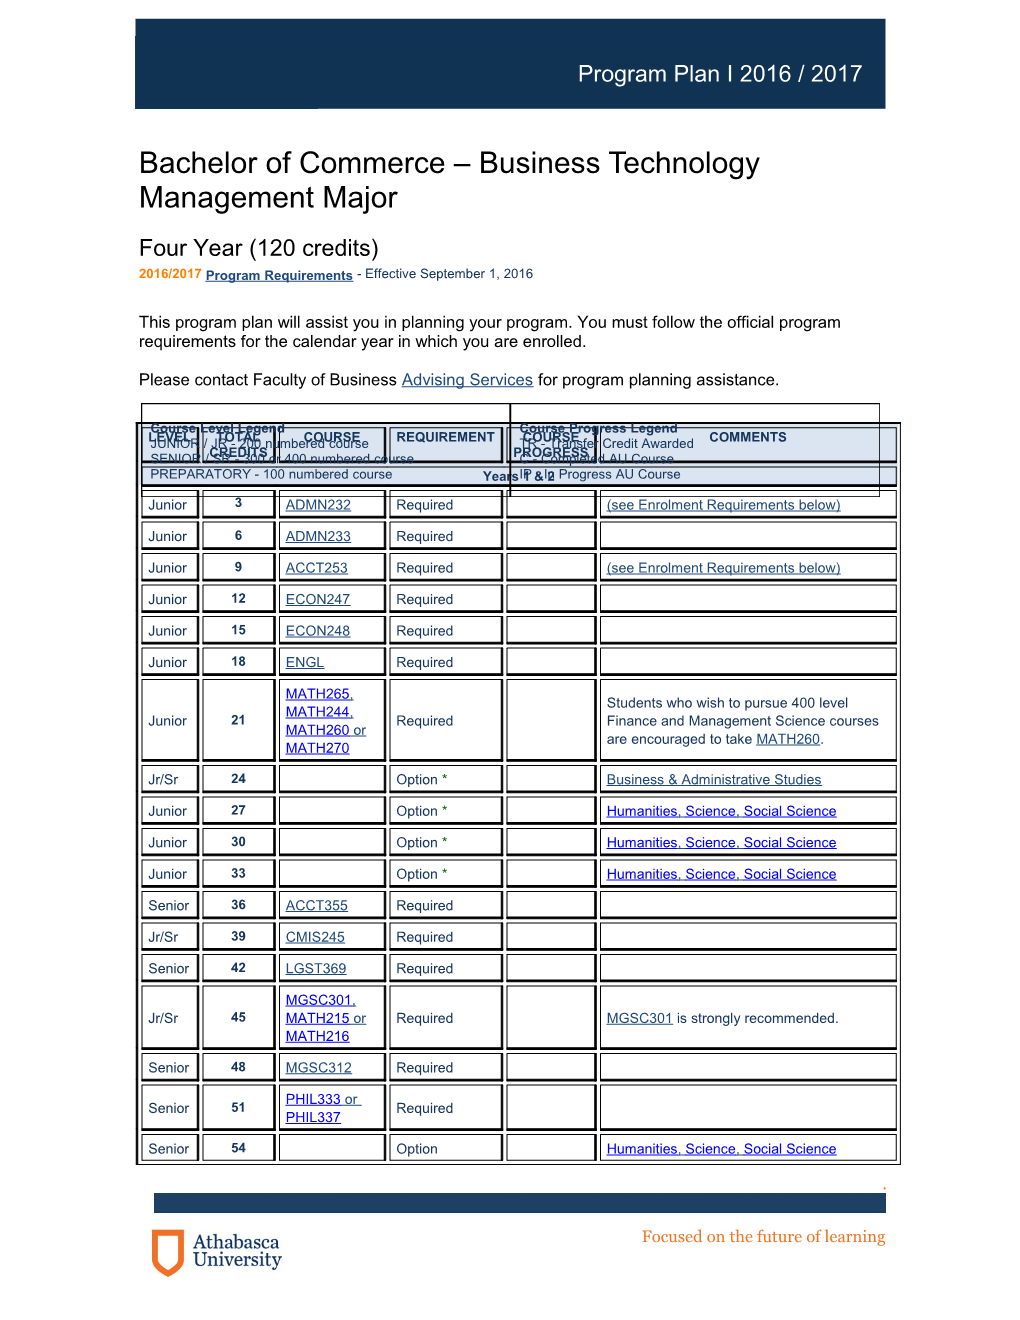 Bachelor of Commerce Business Technology Management Major